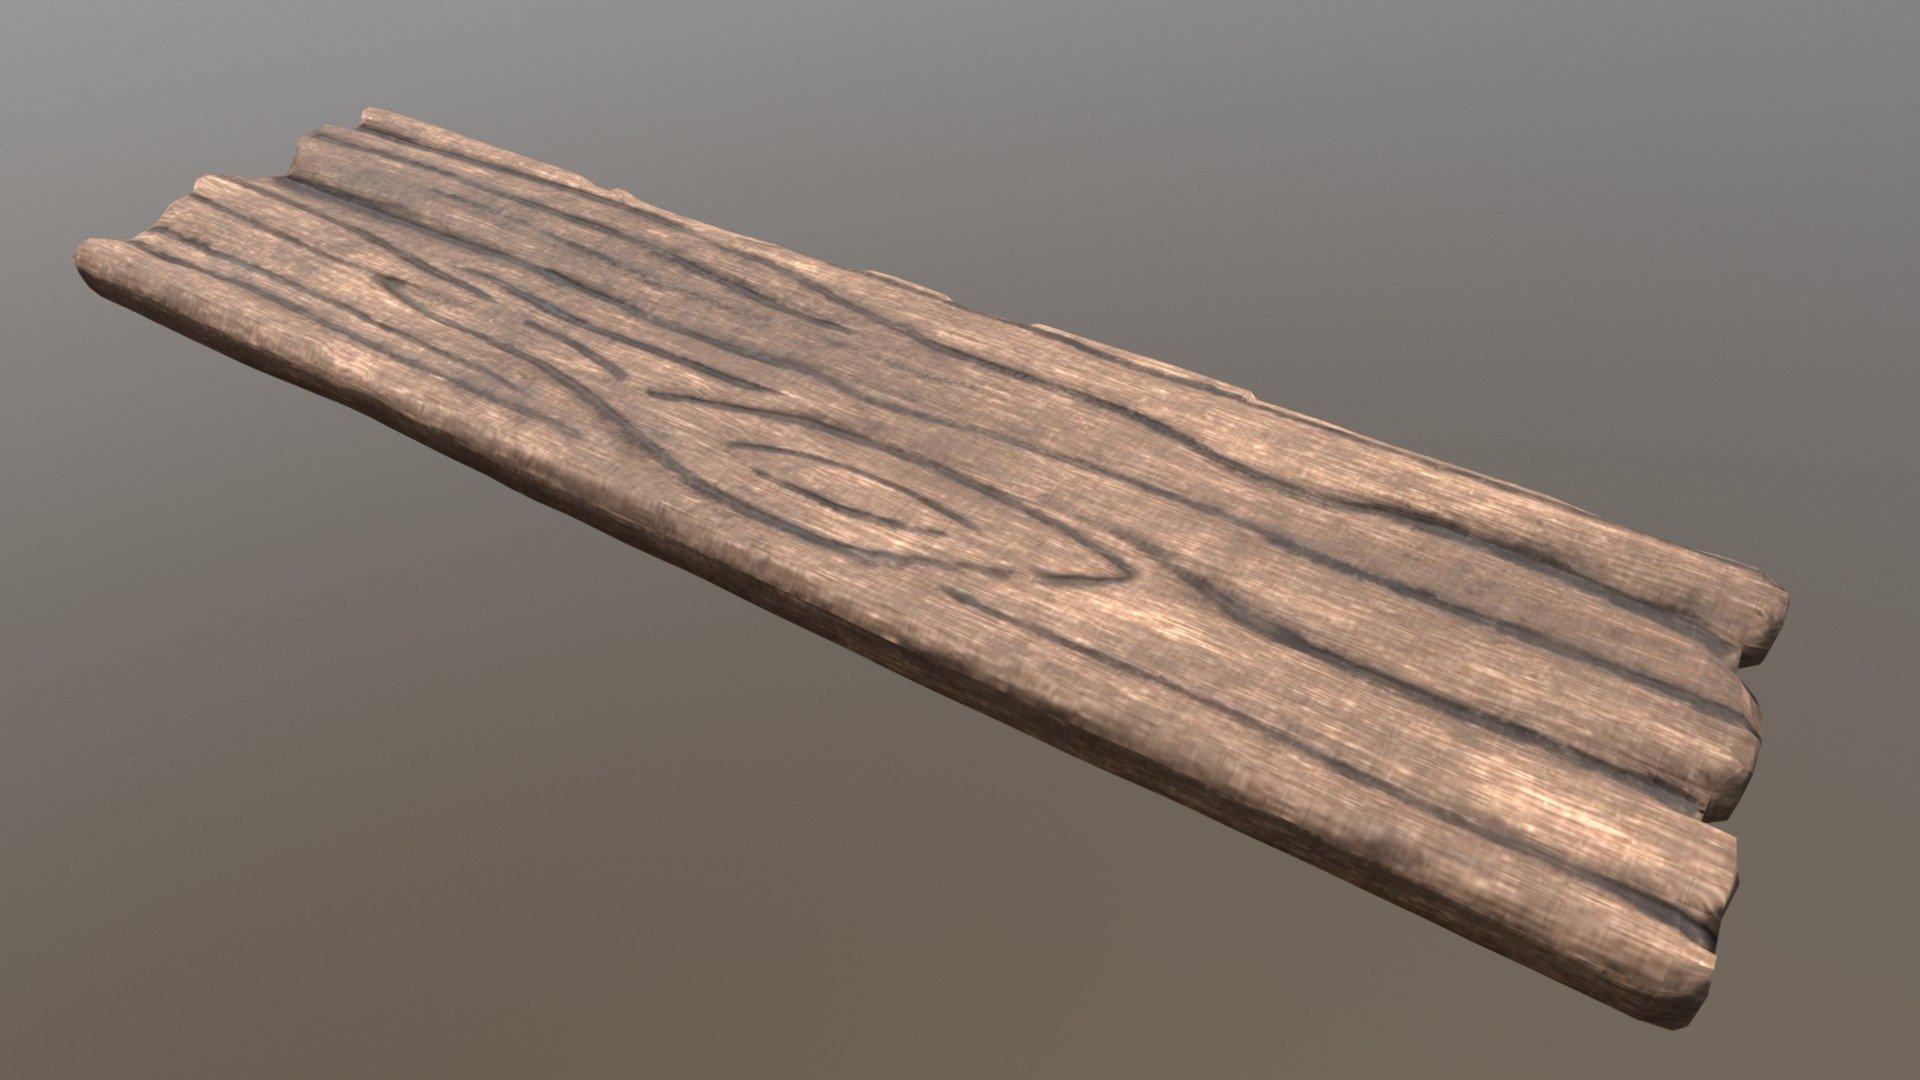 Stylized Wood Plank 3d Model By Avolovar 24193be Sketchfab